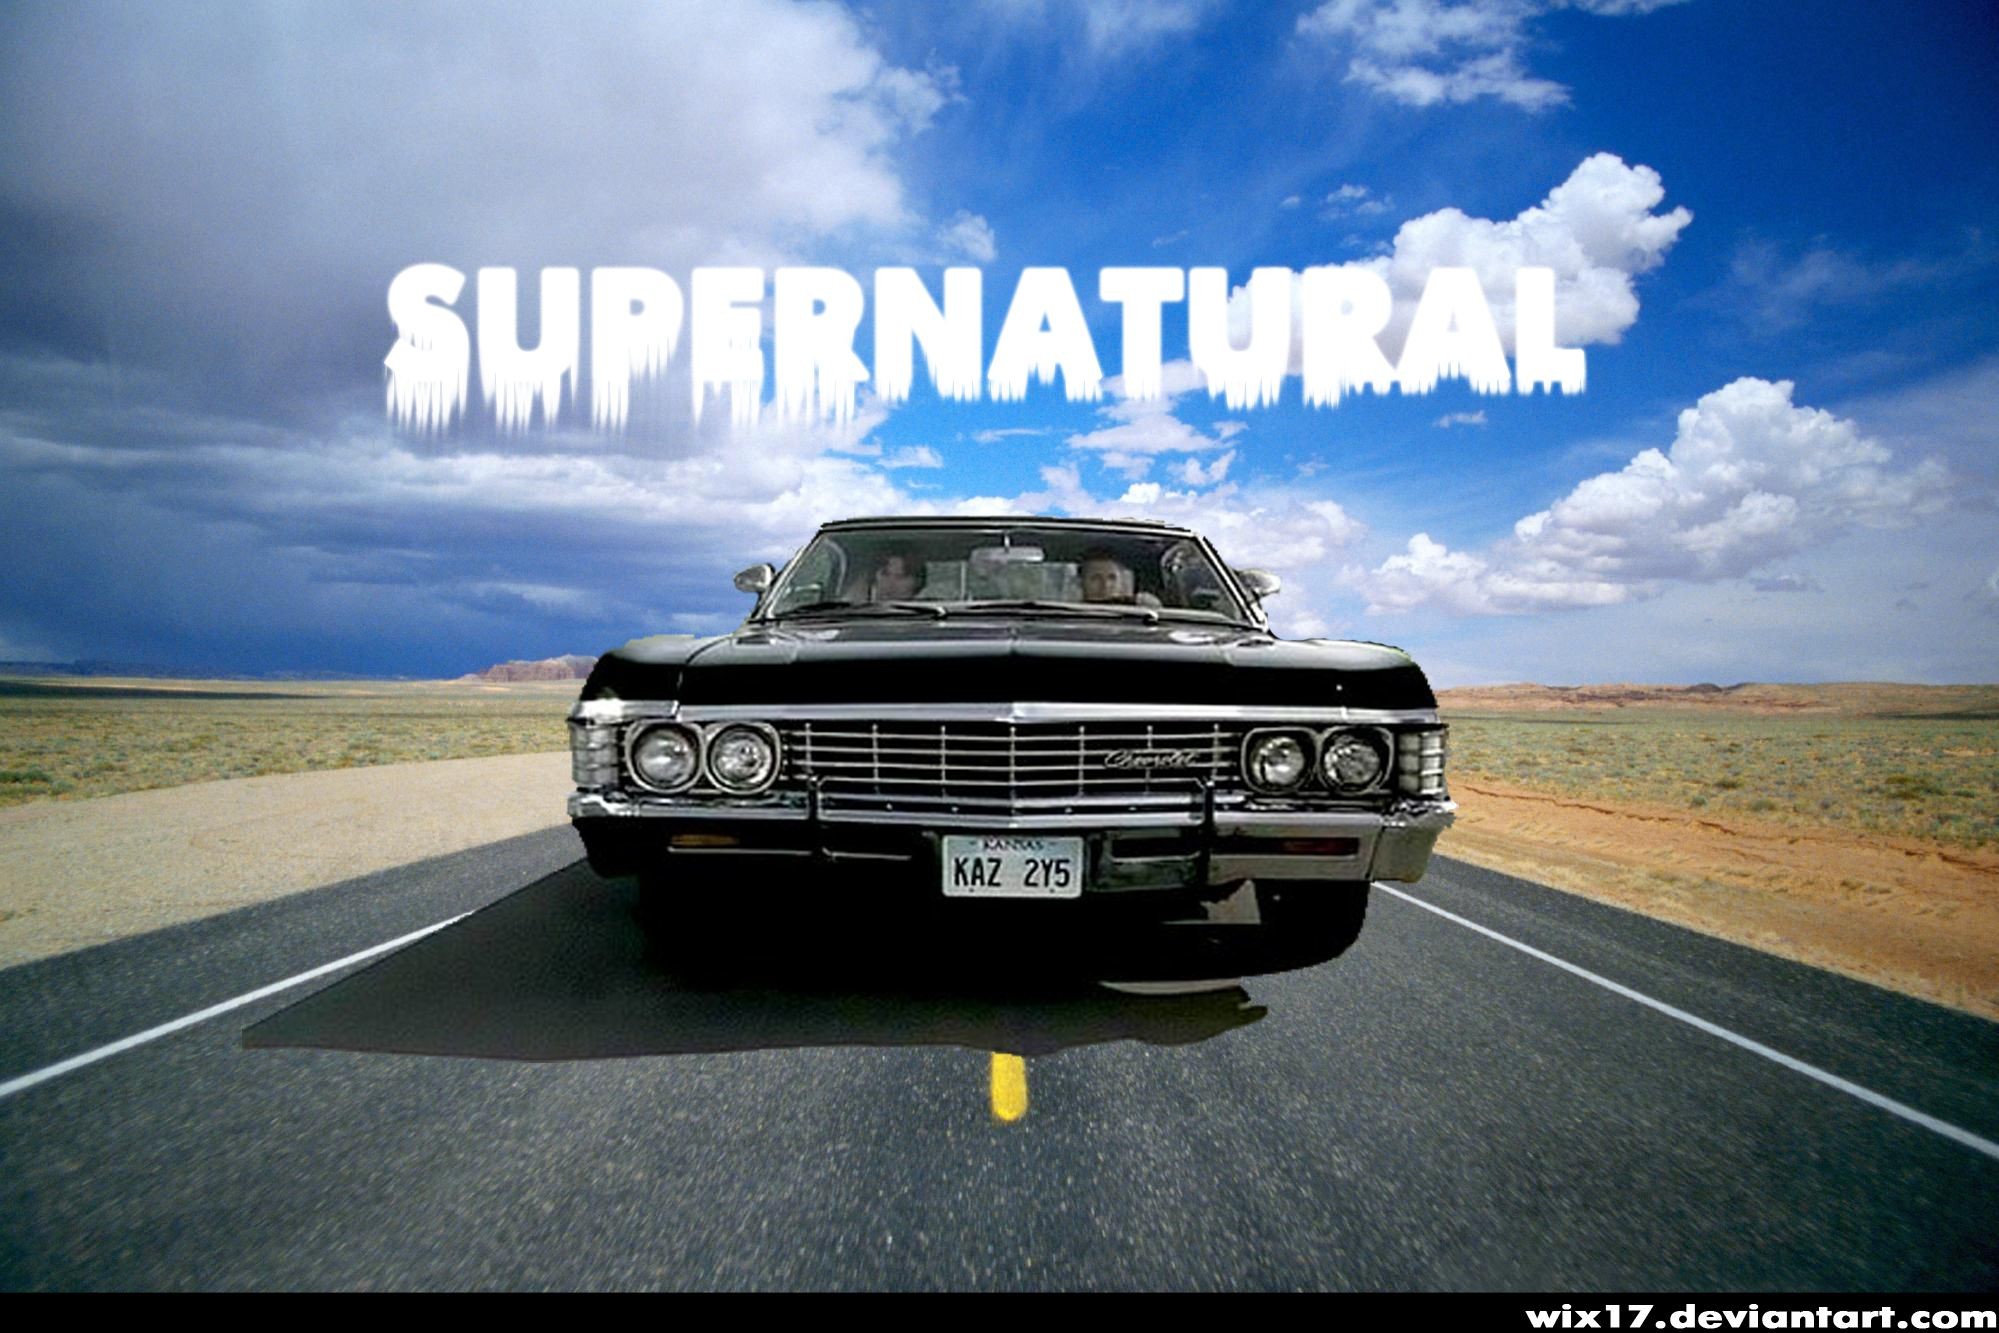 Supernatural Impala Wallpaper.